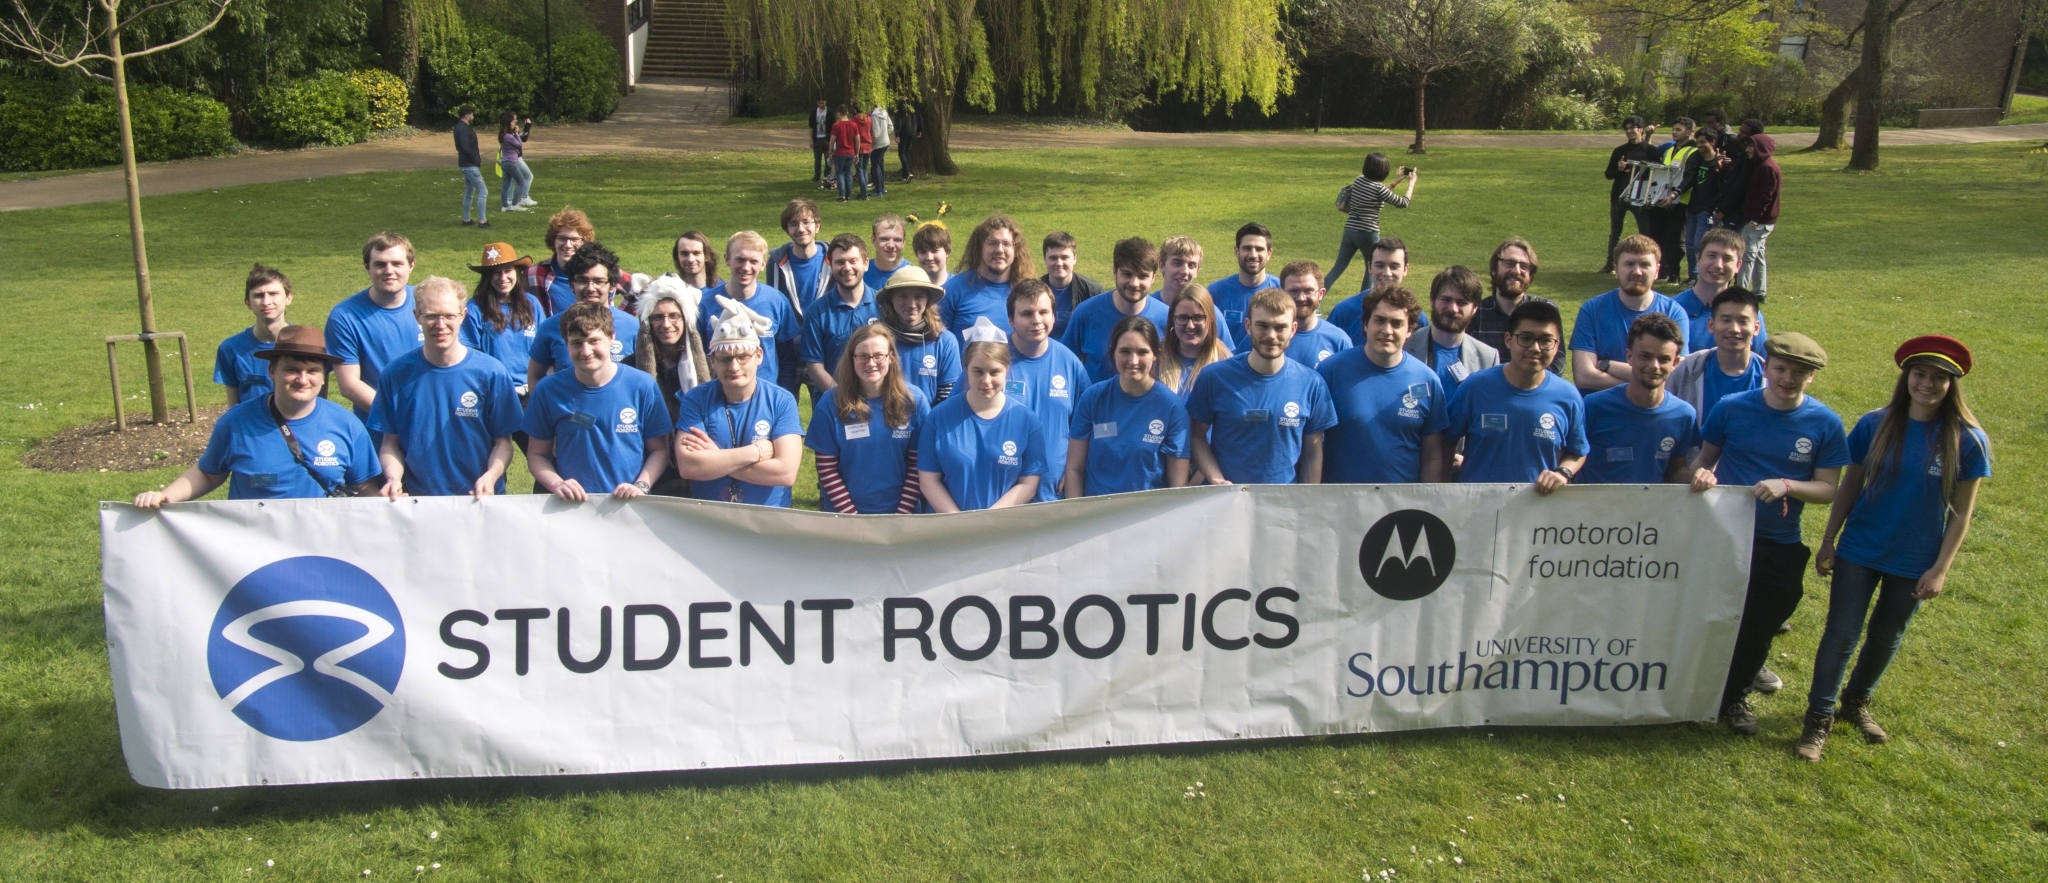 Group of around 50 blue shirted volunteers stood behind Student Robotics banner